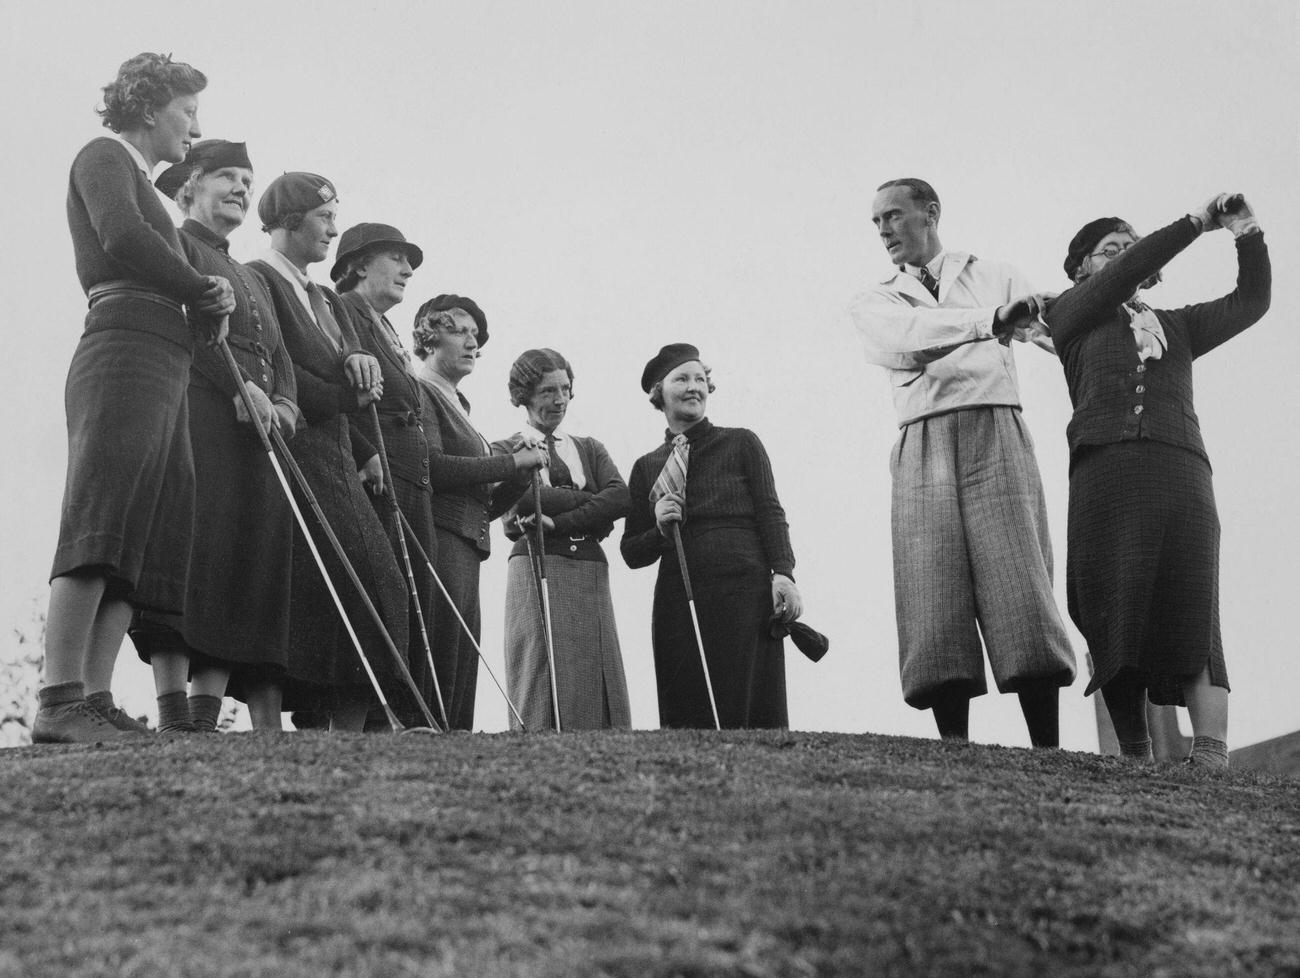 Keith Dalby correcting swing, Finchley Golf Club, October 23, 1937.